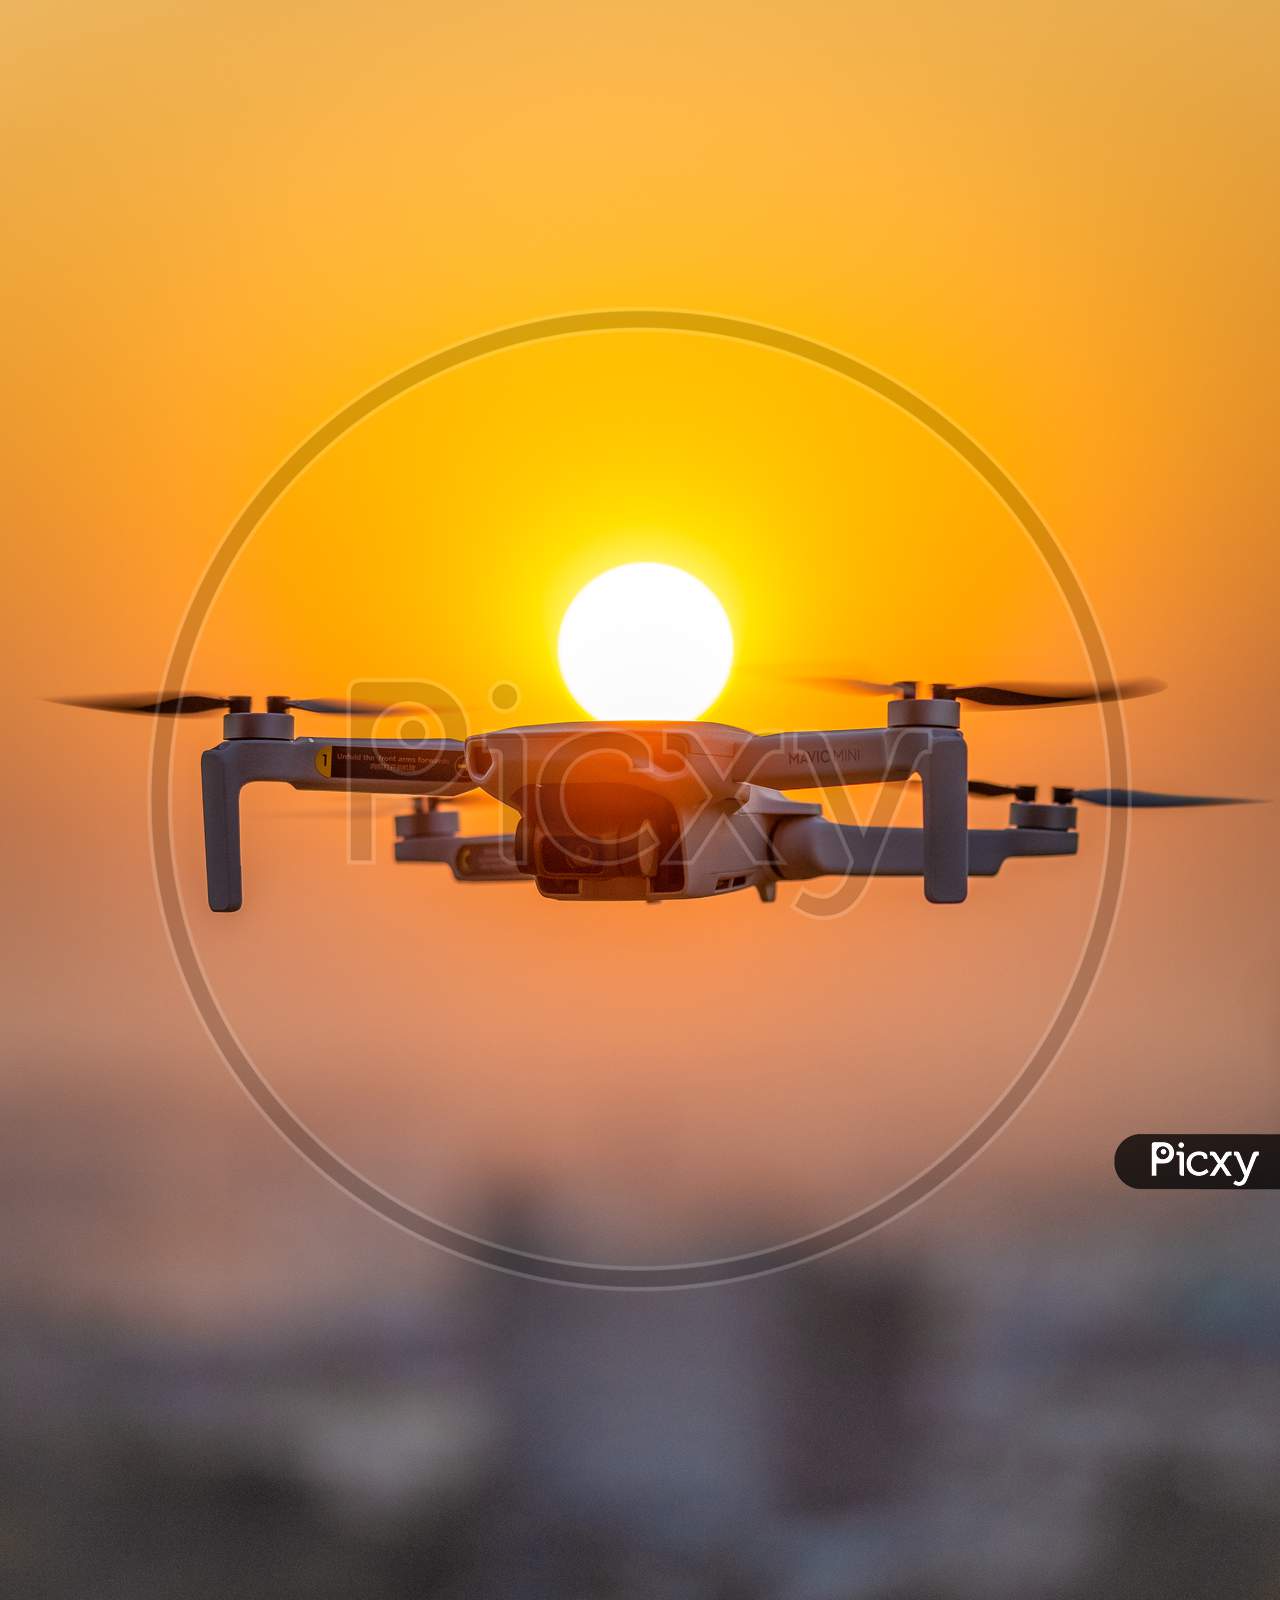 DJI Mavic Mini Drone With Sunset Sun in Background